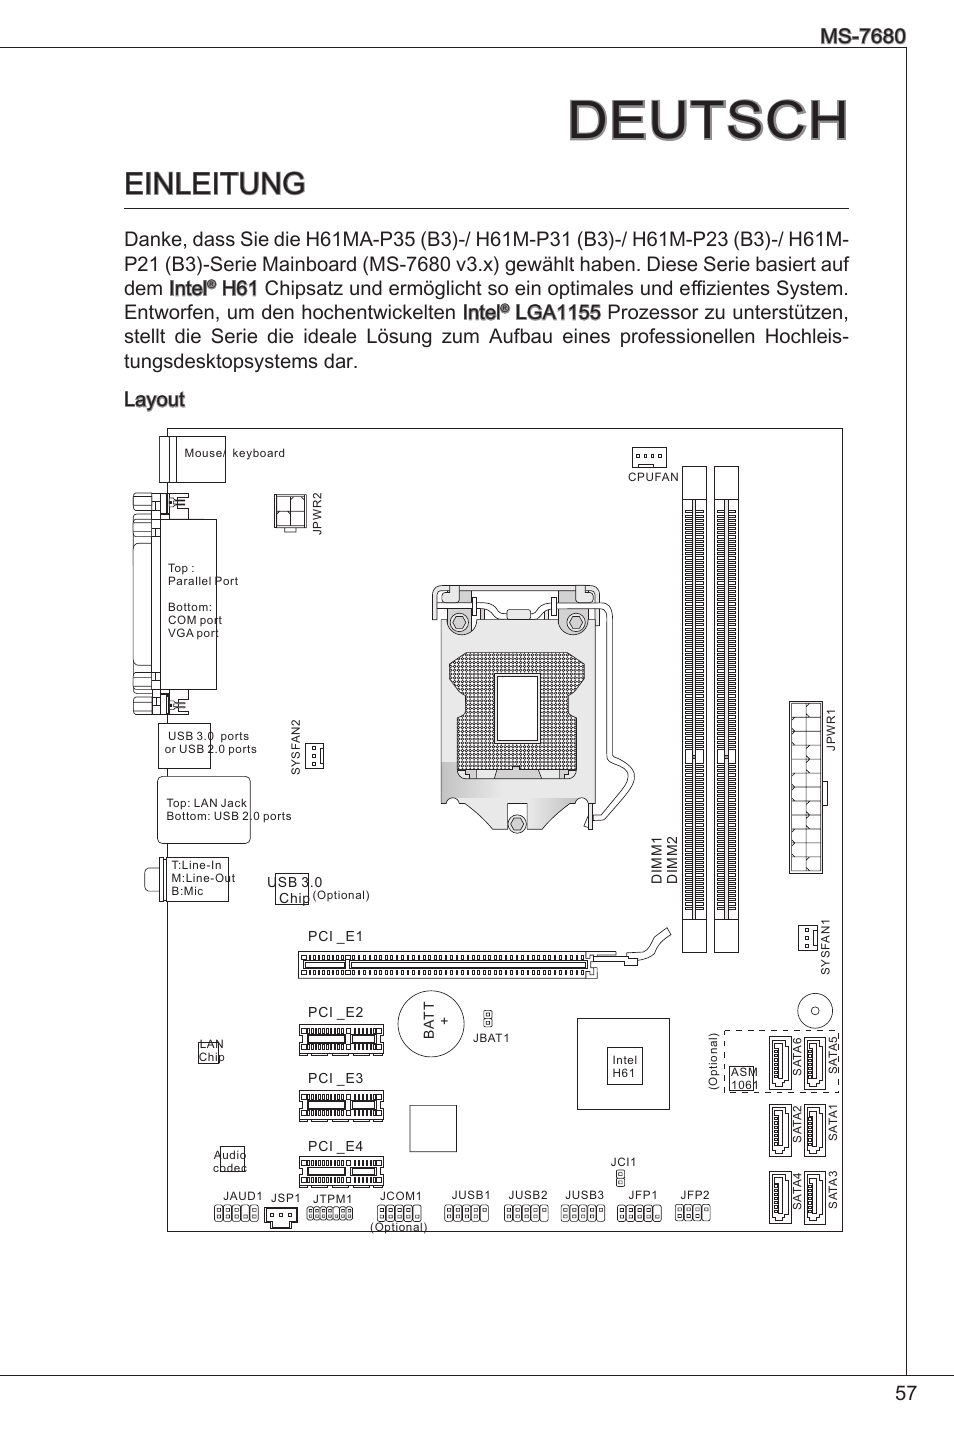 Deutsch, Einleitung | MSI H61M-P21 (B3) User Manual | Page 57 / 137 |  Original mode